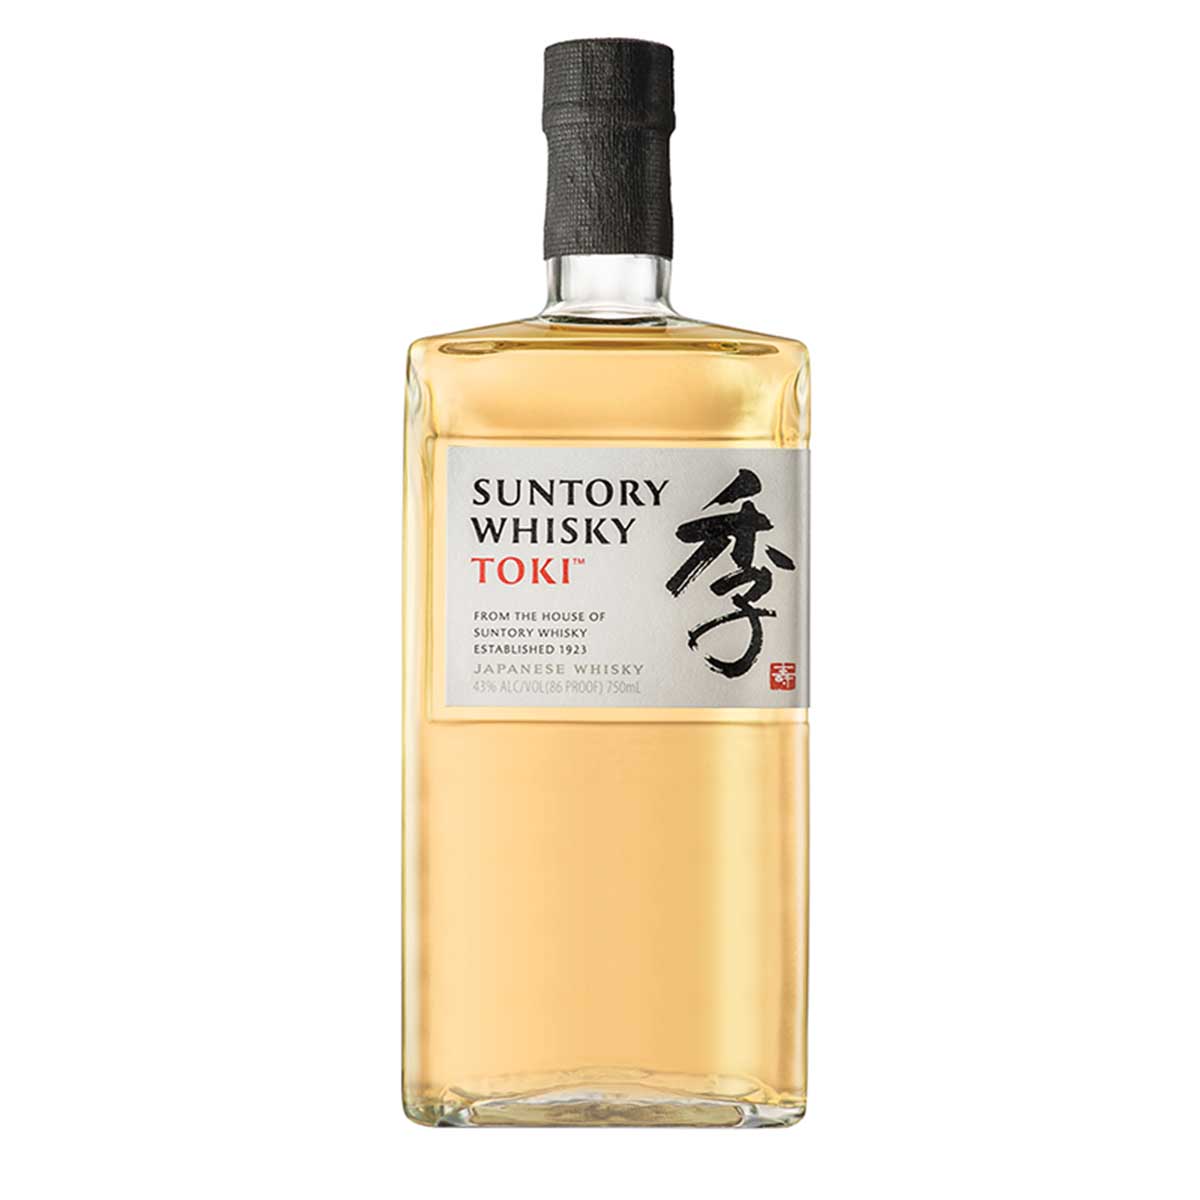 Whisky Japonés Suntory Toki ml Sampieri Vinos y Licores